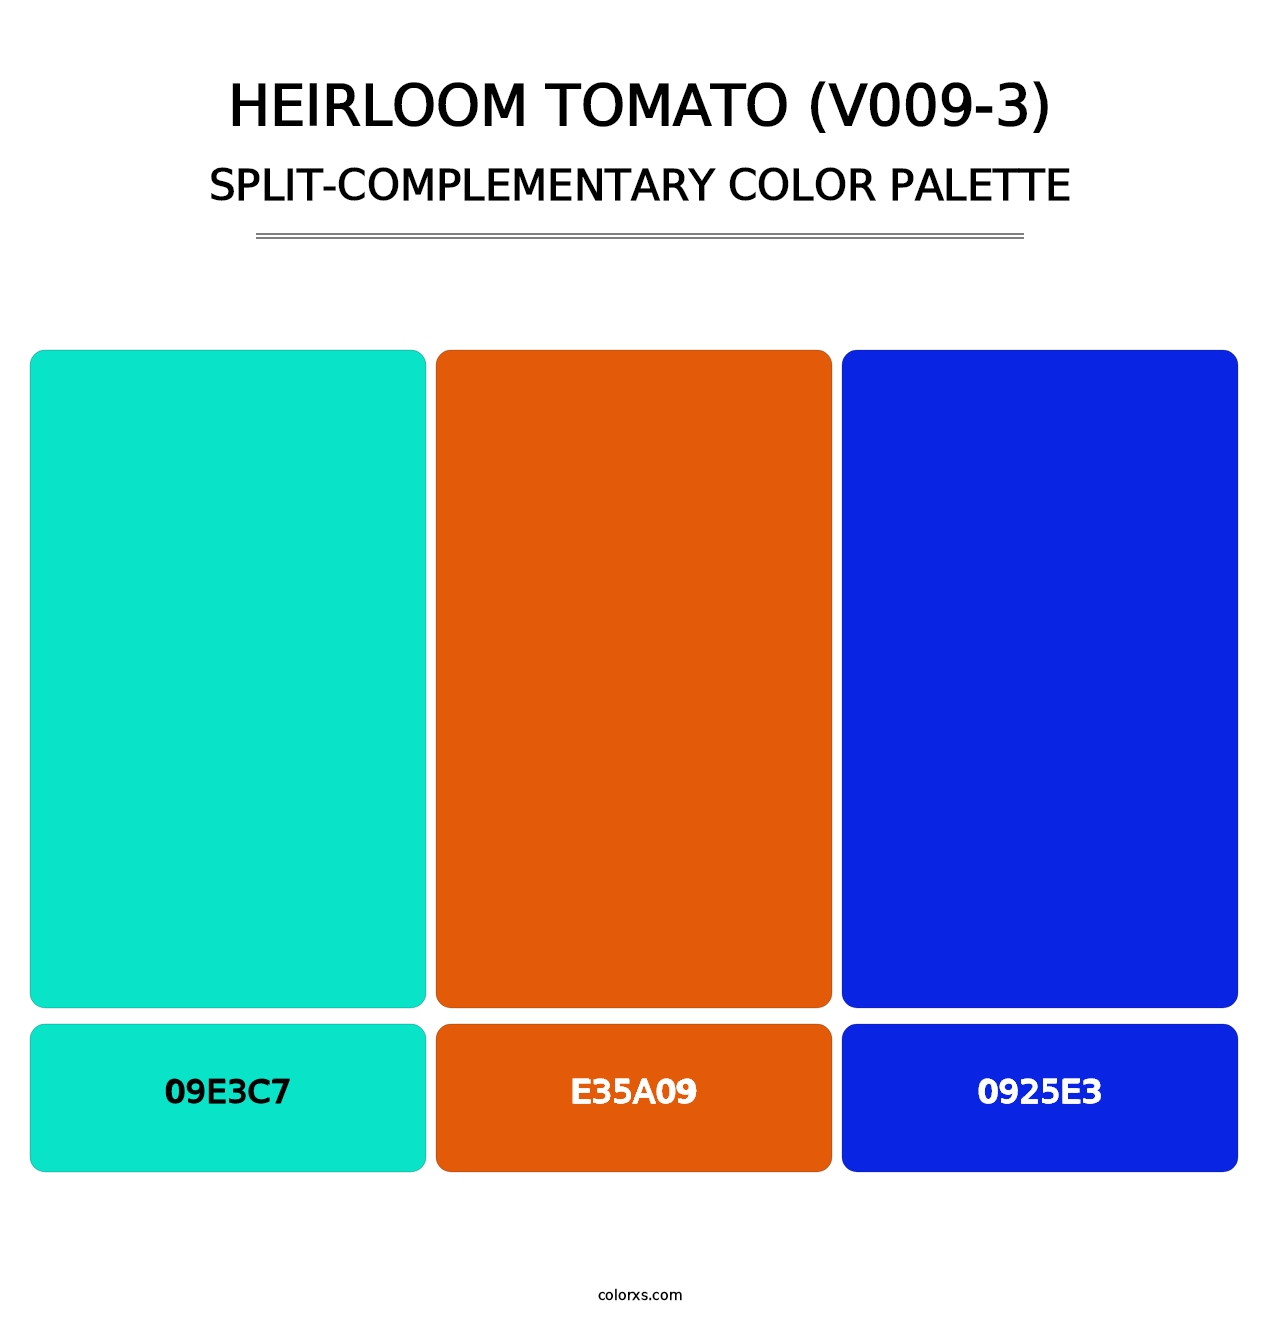 Heirloom Tomato (V009-3) - Split-Complementary Color Palette